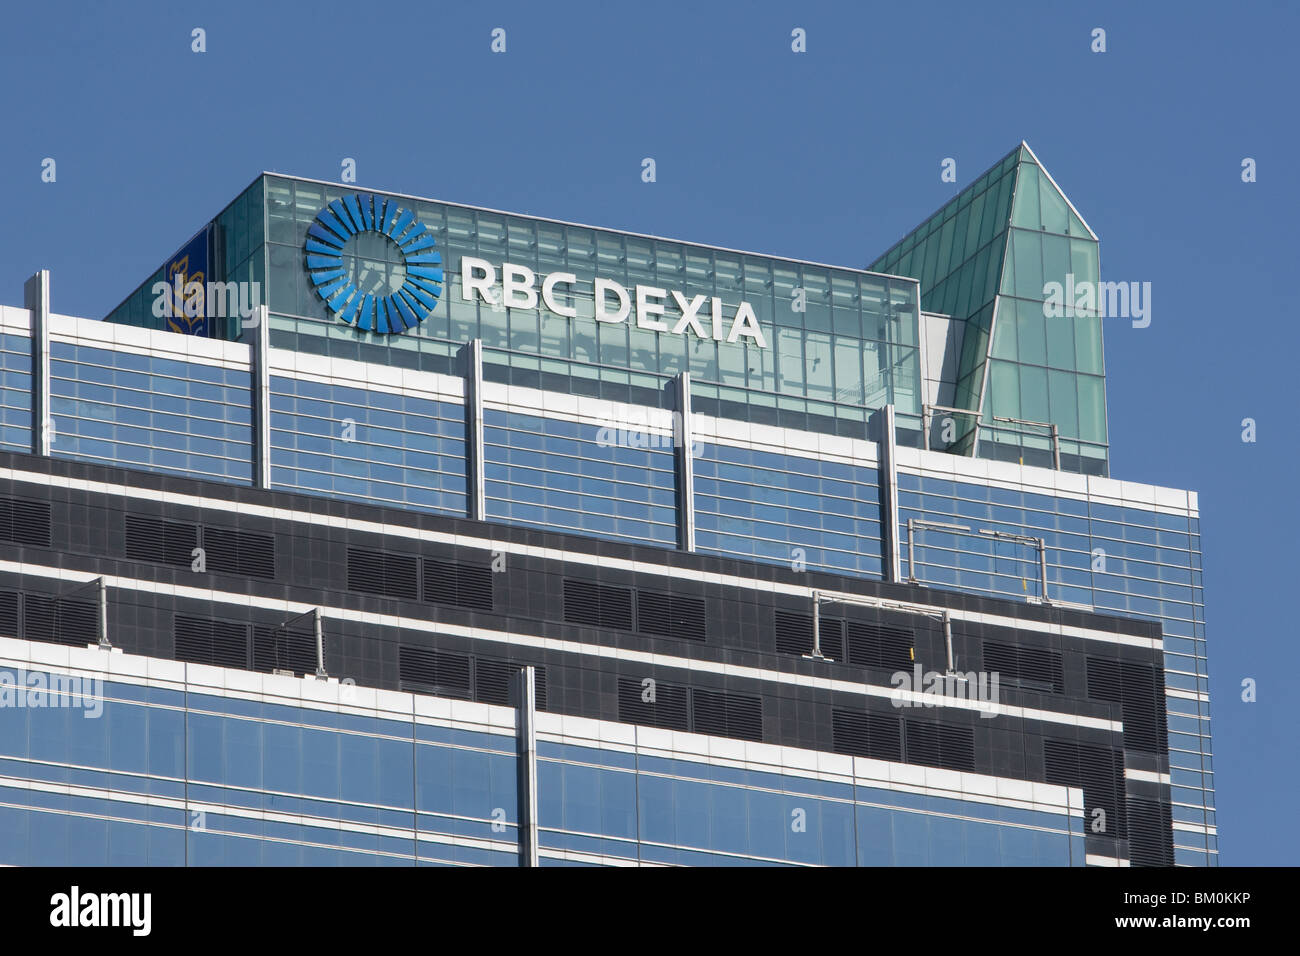 RBC Dexia logo is seen in Toronto financial district Stock Photo